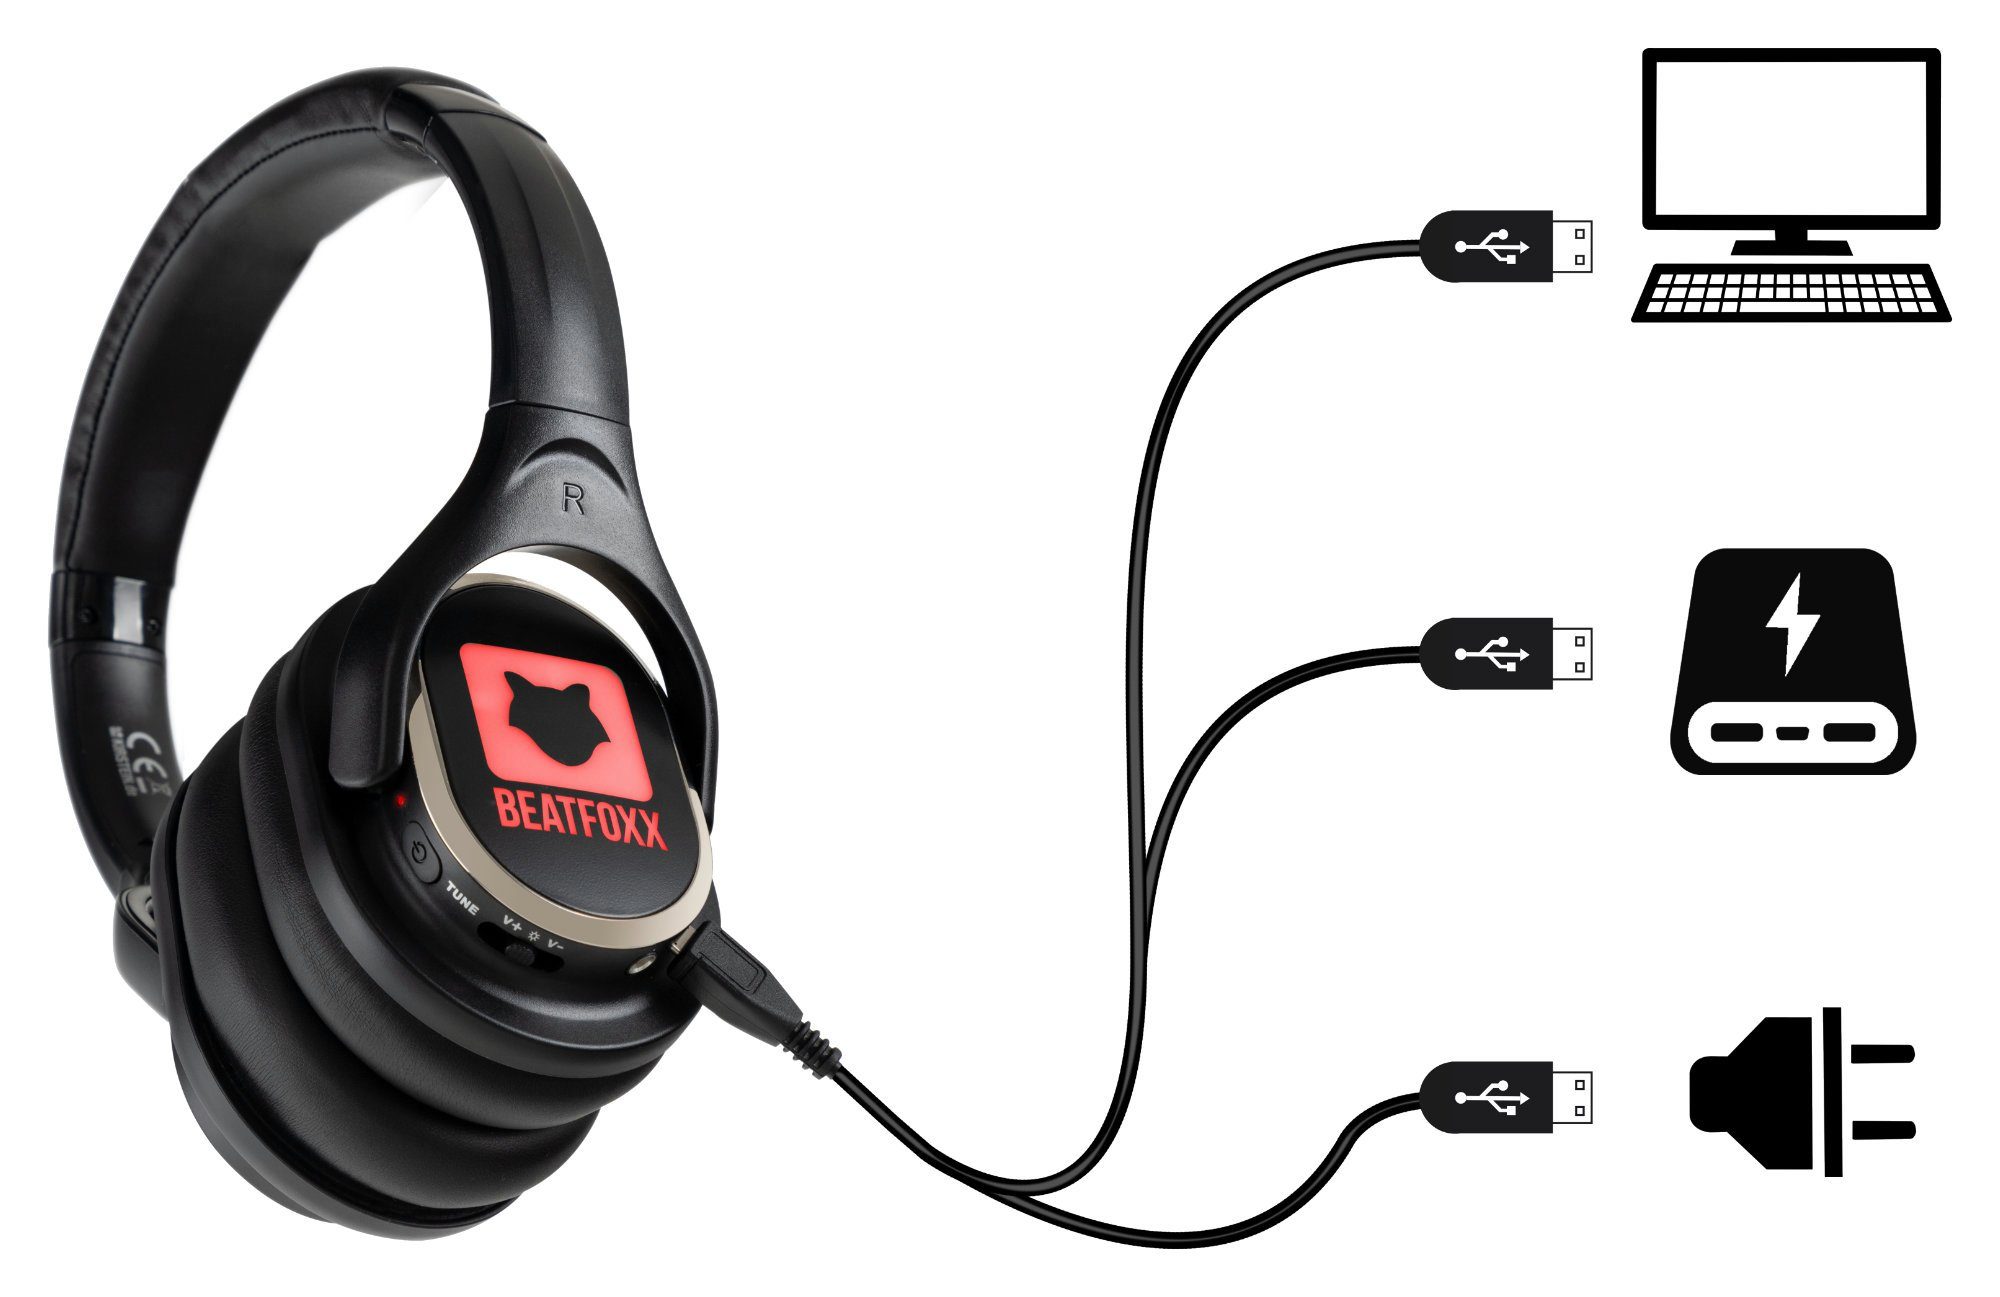 empfangbare Funk-Kopfhörer Stereo Disco Silent UHF-Technik, (Wireless Disco-Anwendungen, Silent Kopfhörer 3 V2 SDH-340 Beatfoxx Kanäle) für